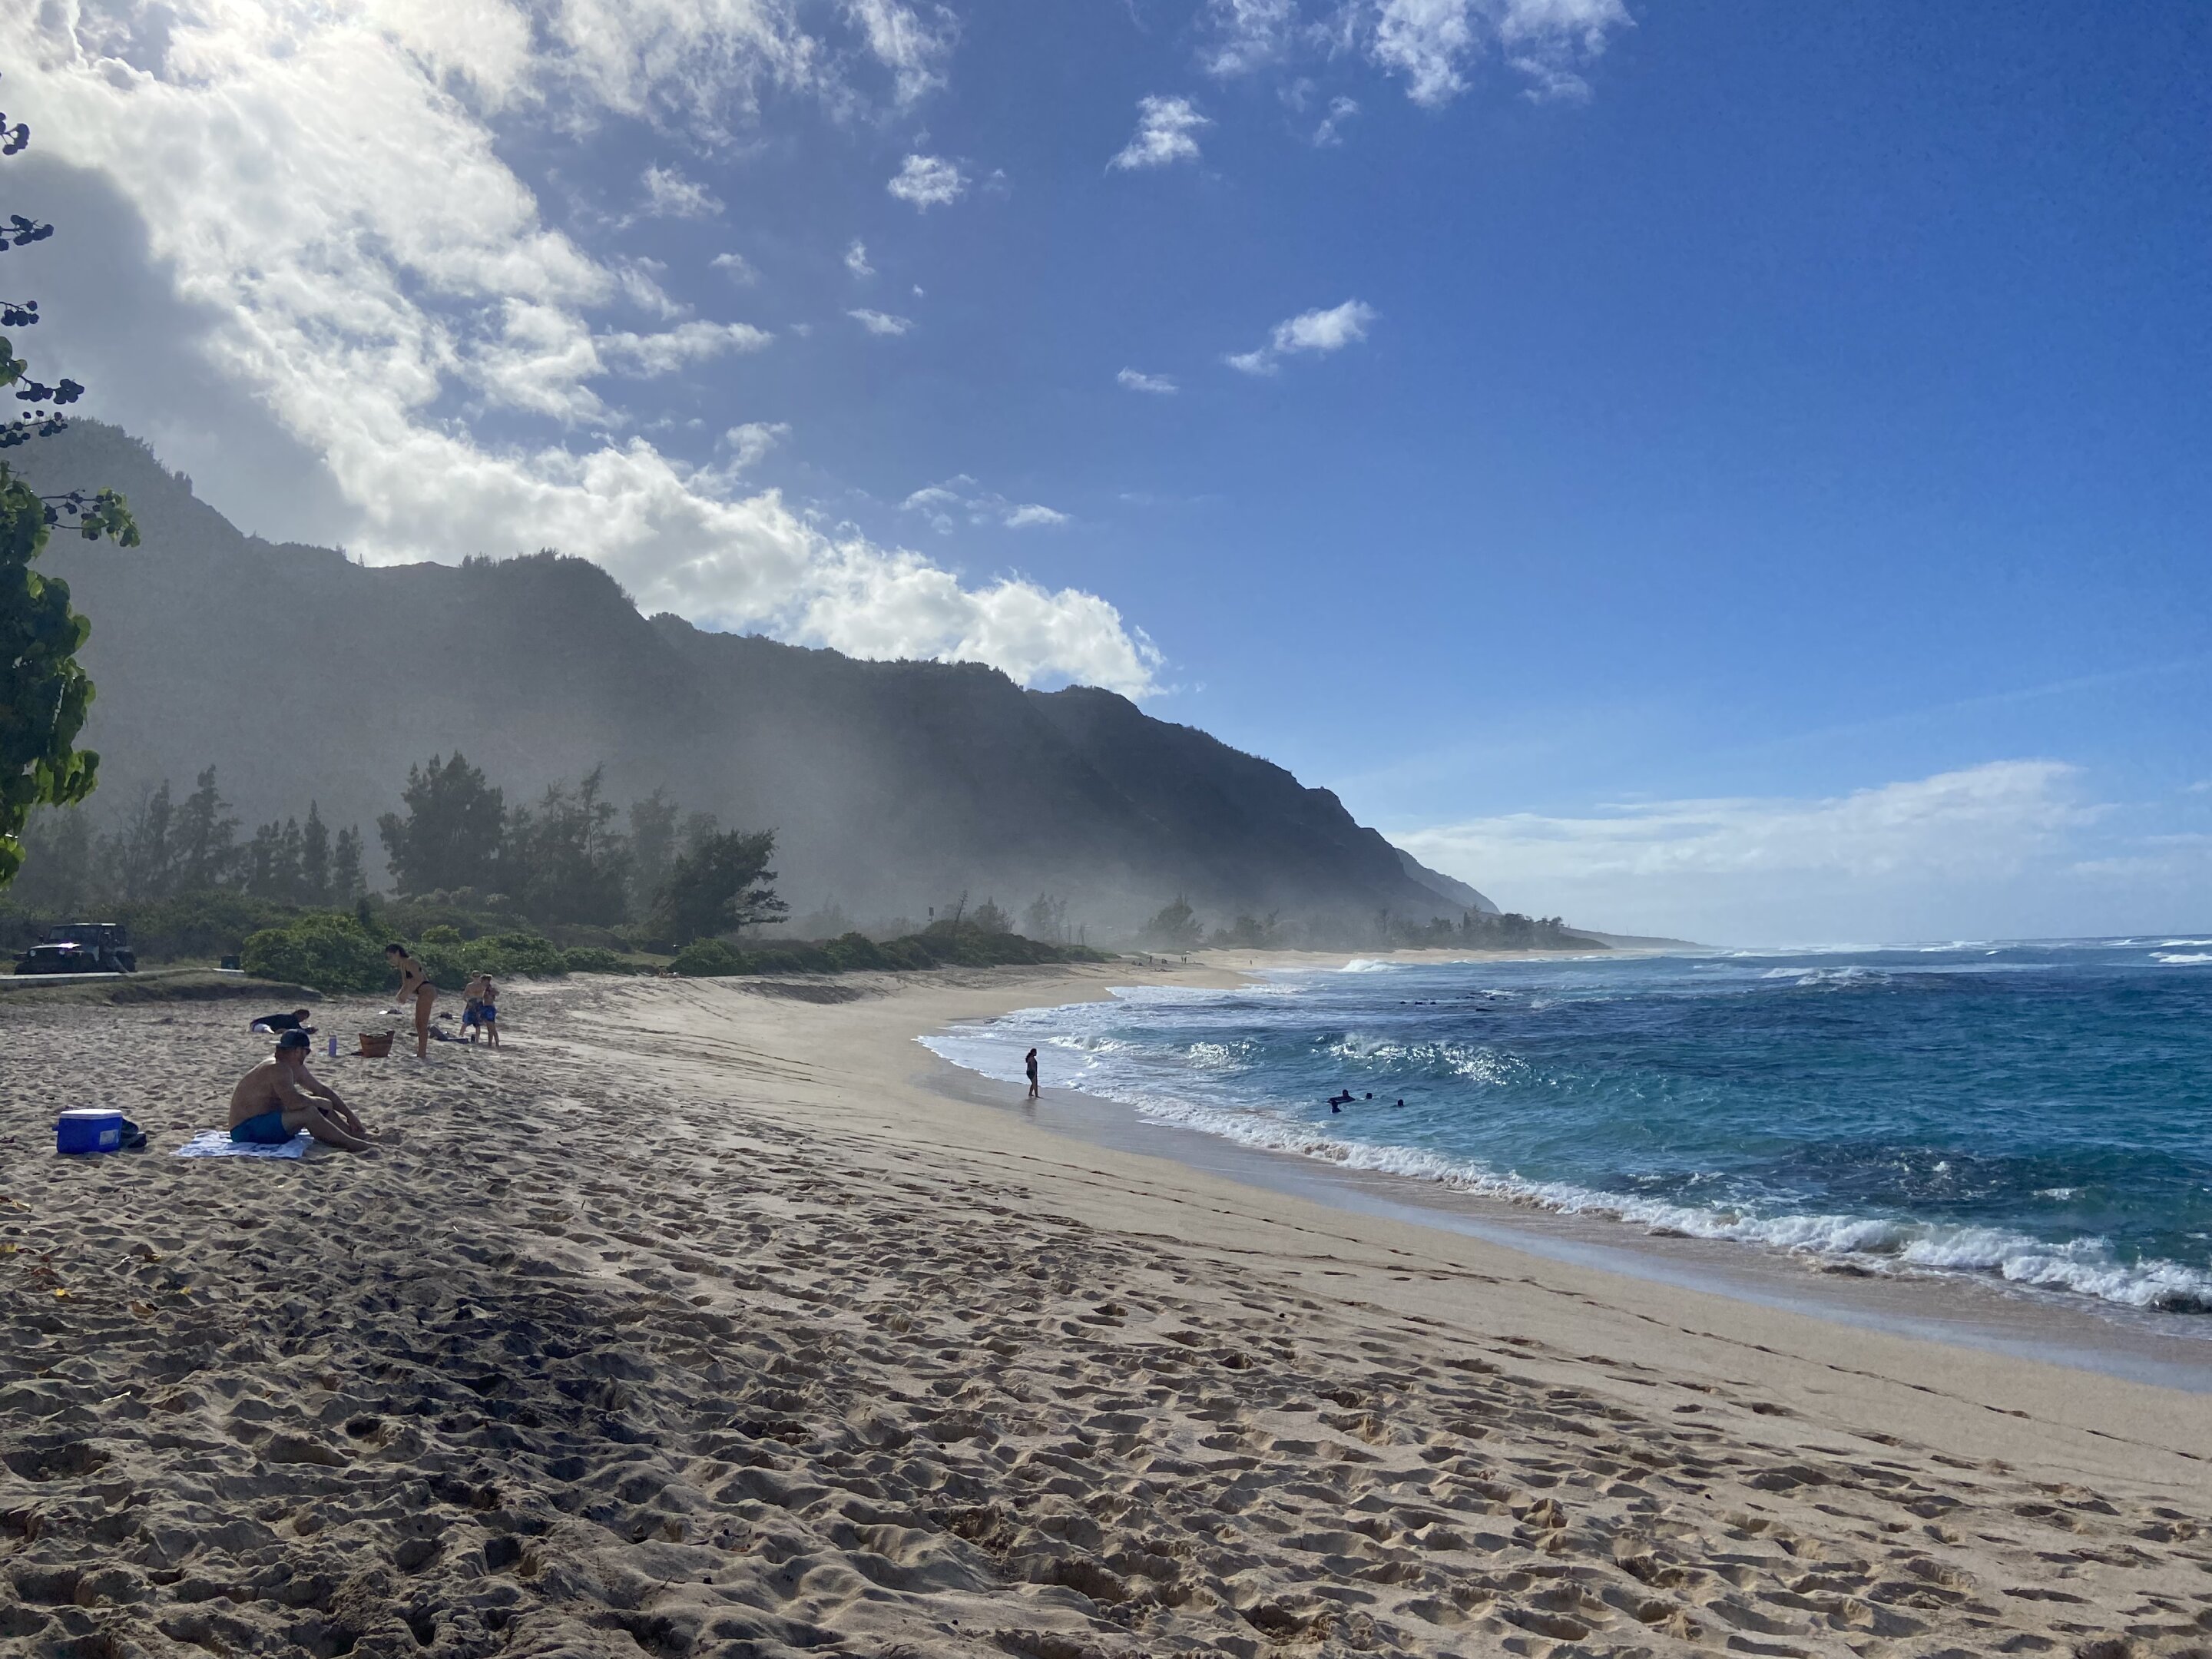 Giant sea salt aerosols found to play major role in Hawai’i’s coastal clouds, rain